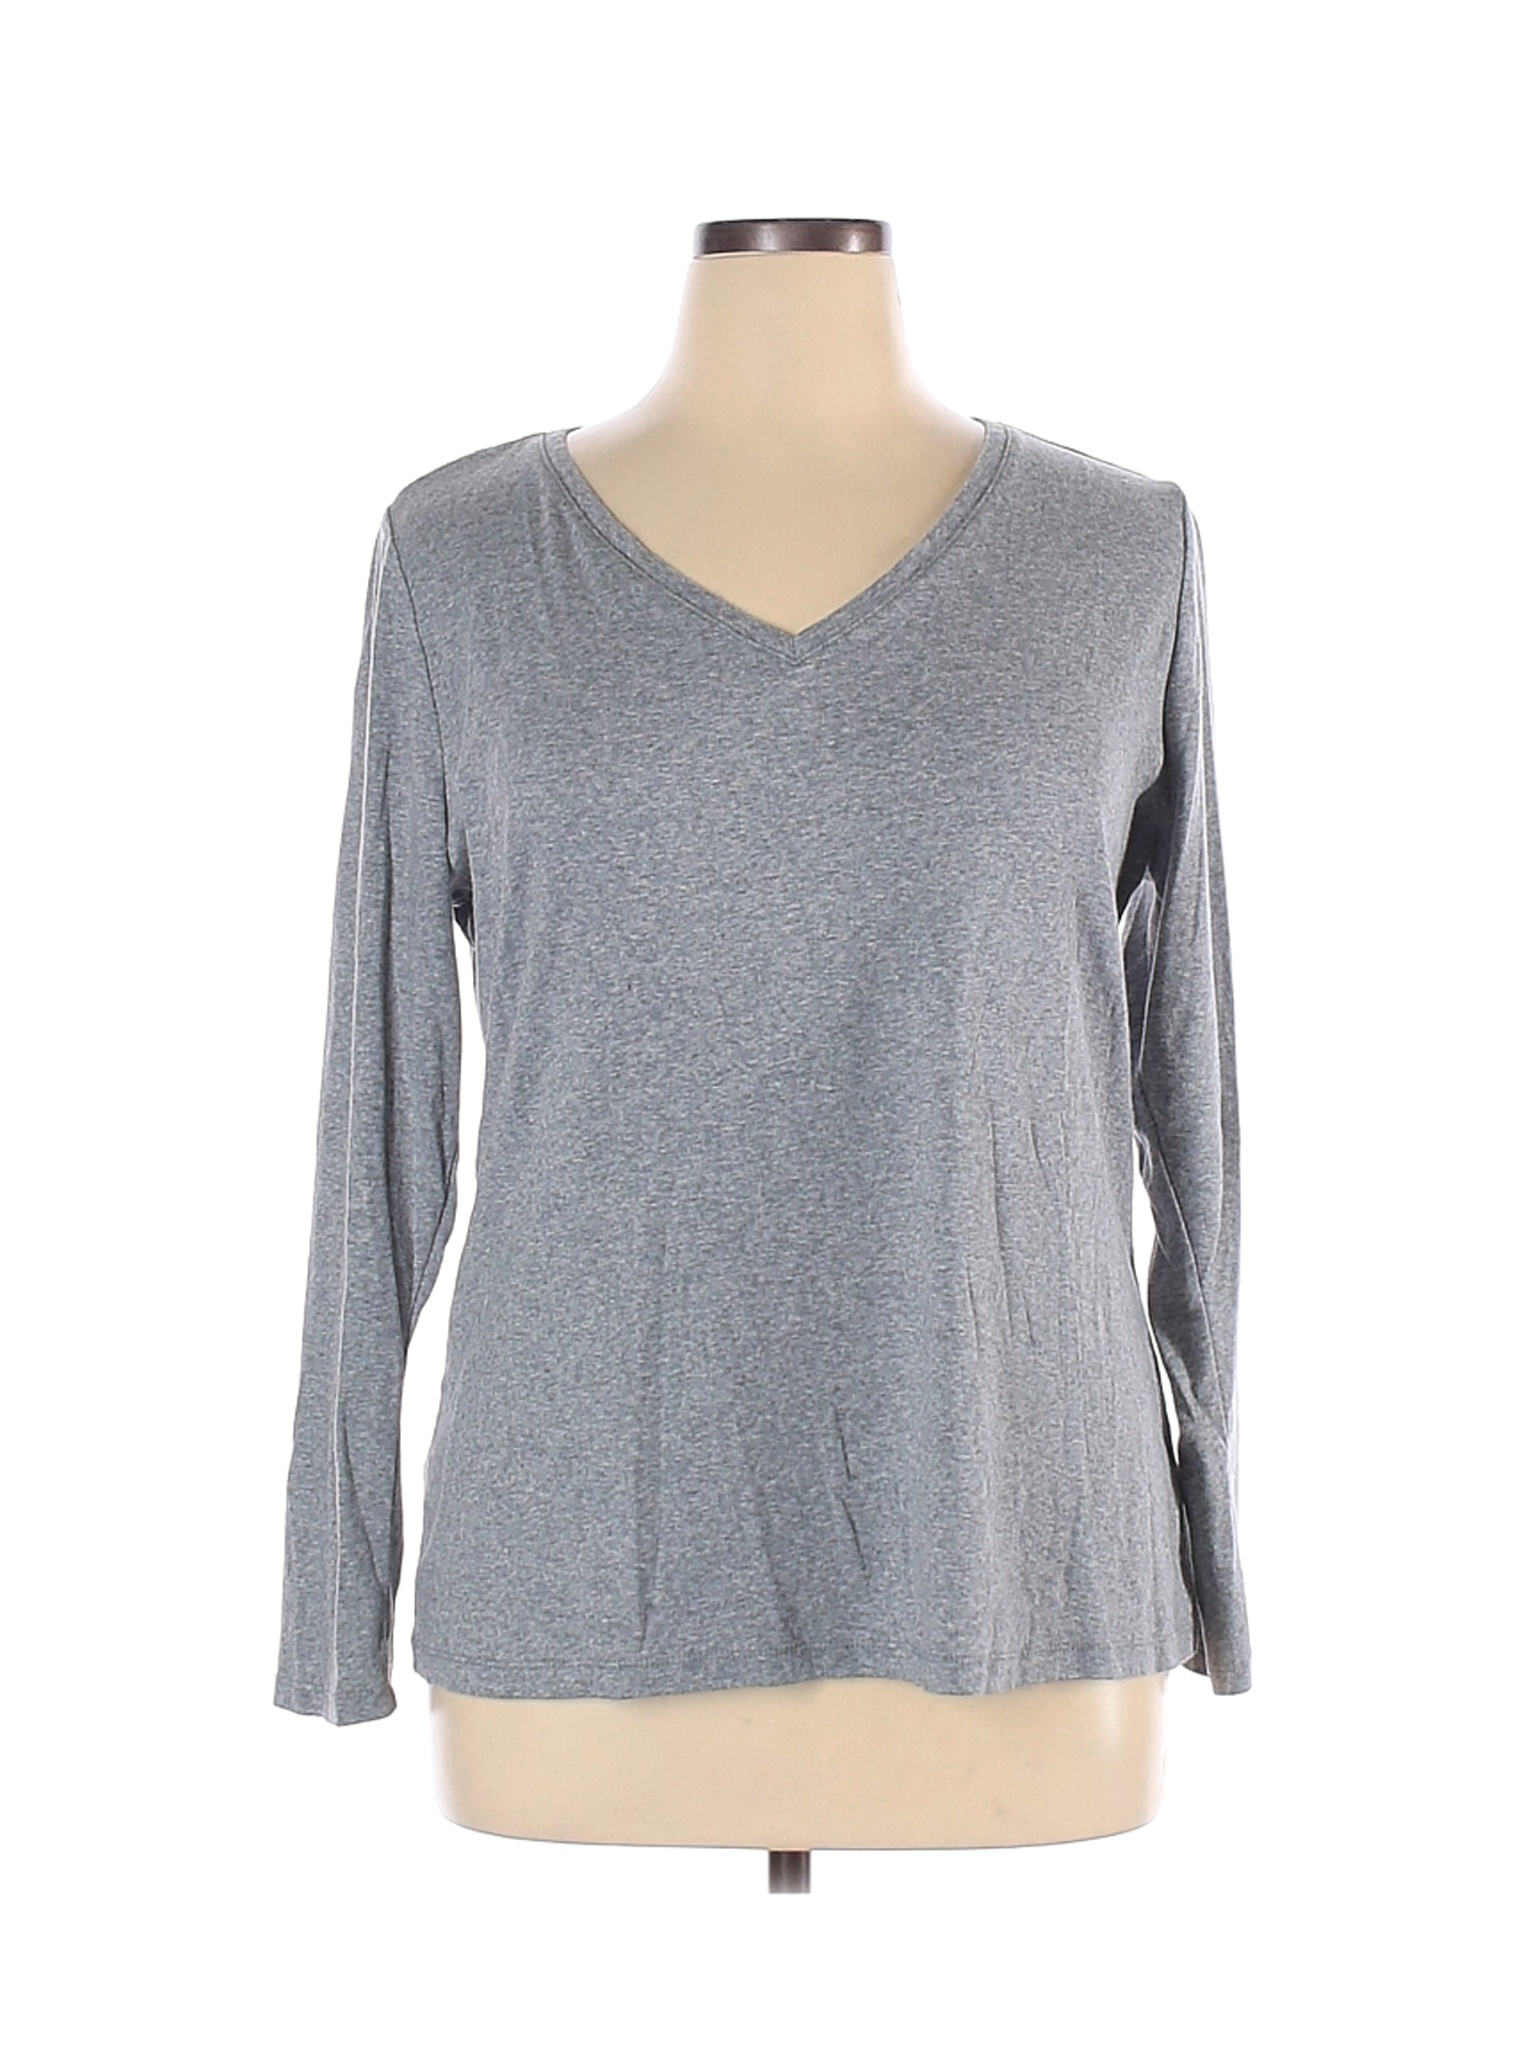 Lane Bryant Women Gray Long Sleeve T-Shirt 14 | eBay